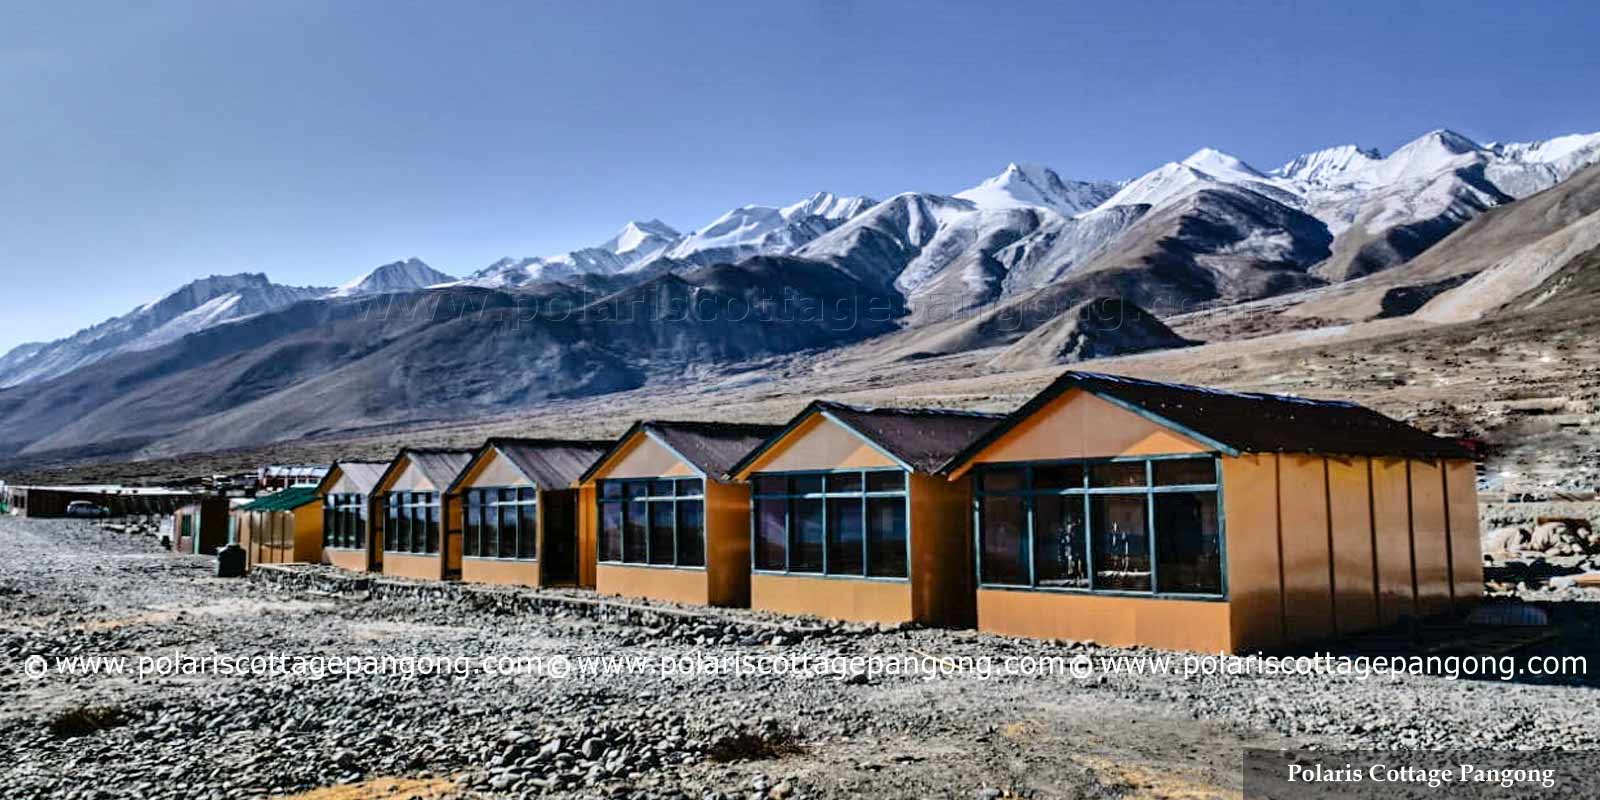 Polaris Cottage Pangong Ladakh